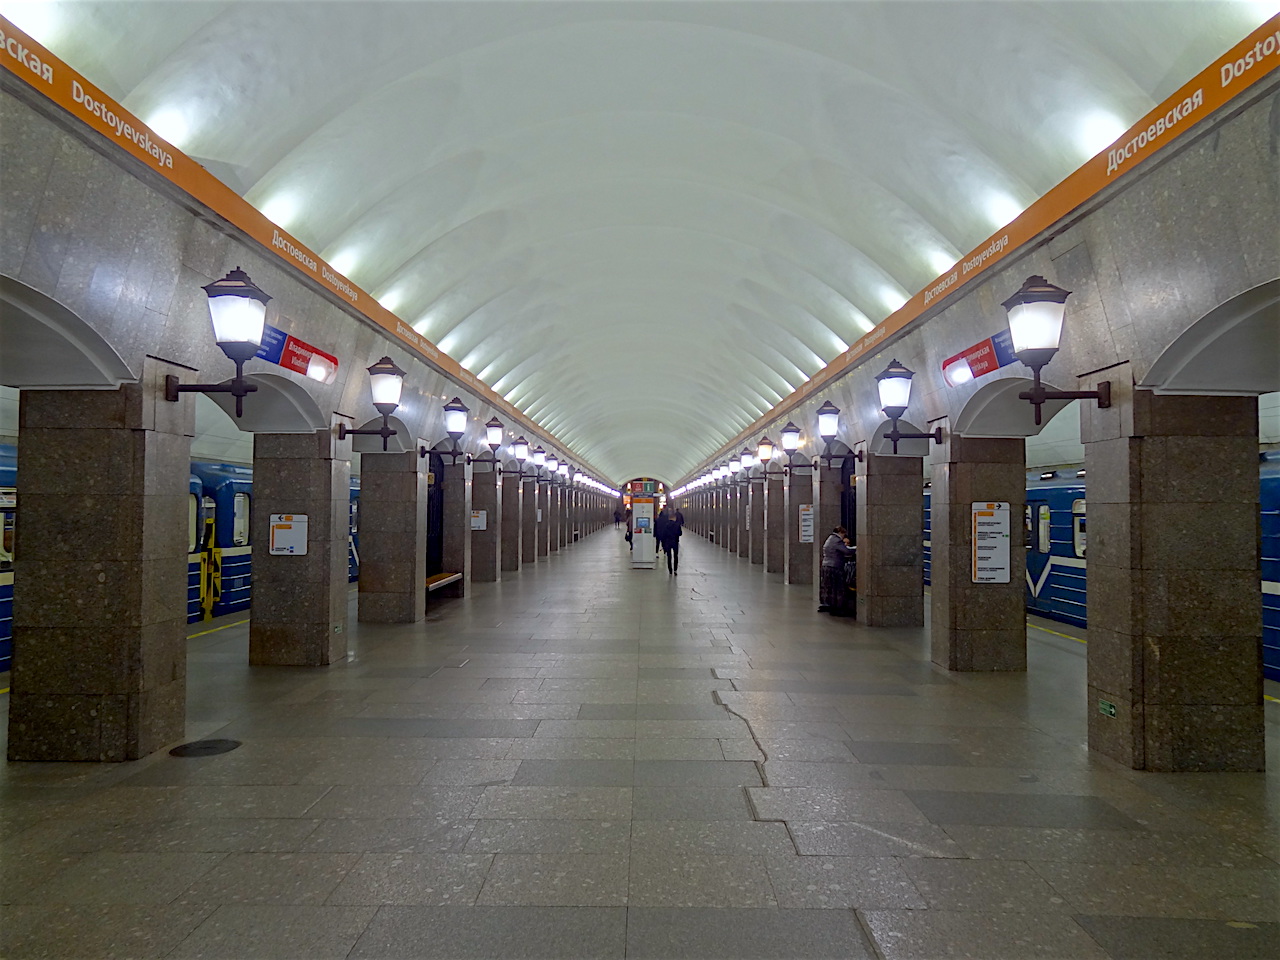 station de métro Dostoïevskaya à Saint-Pétersbourg